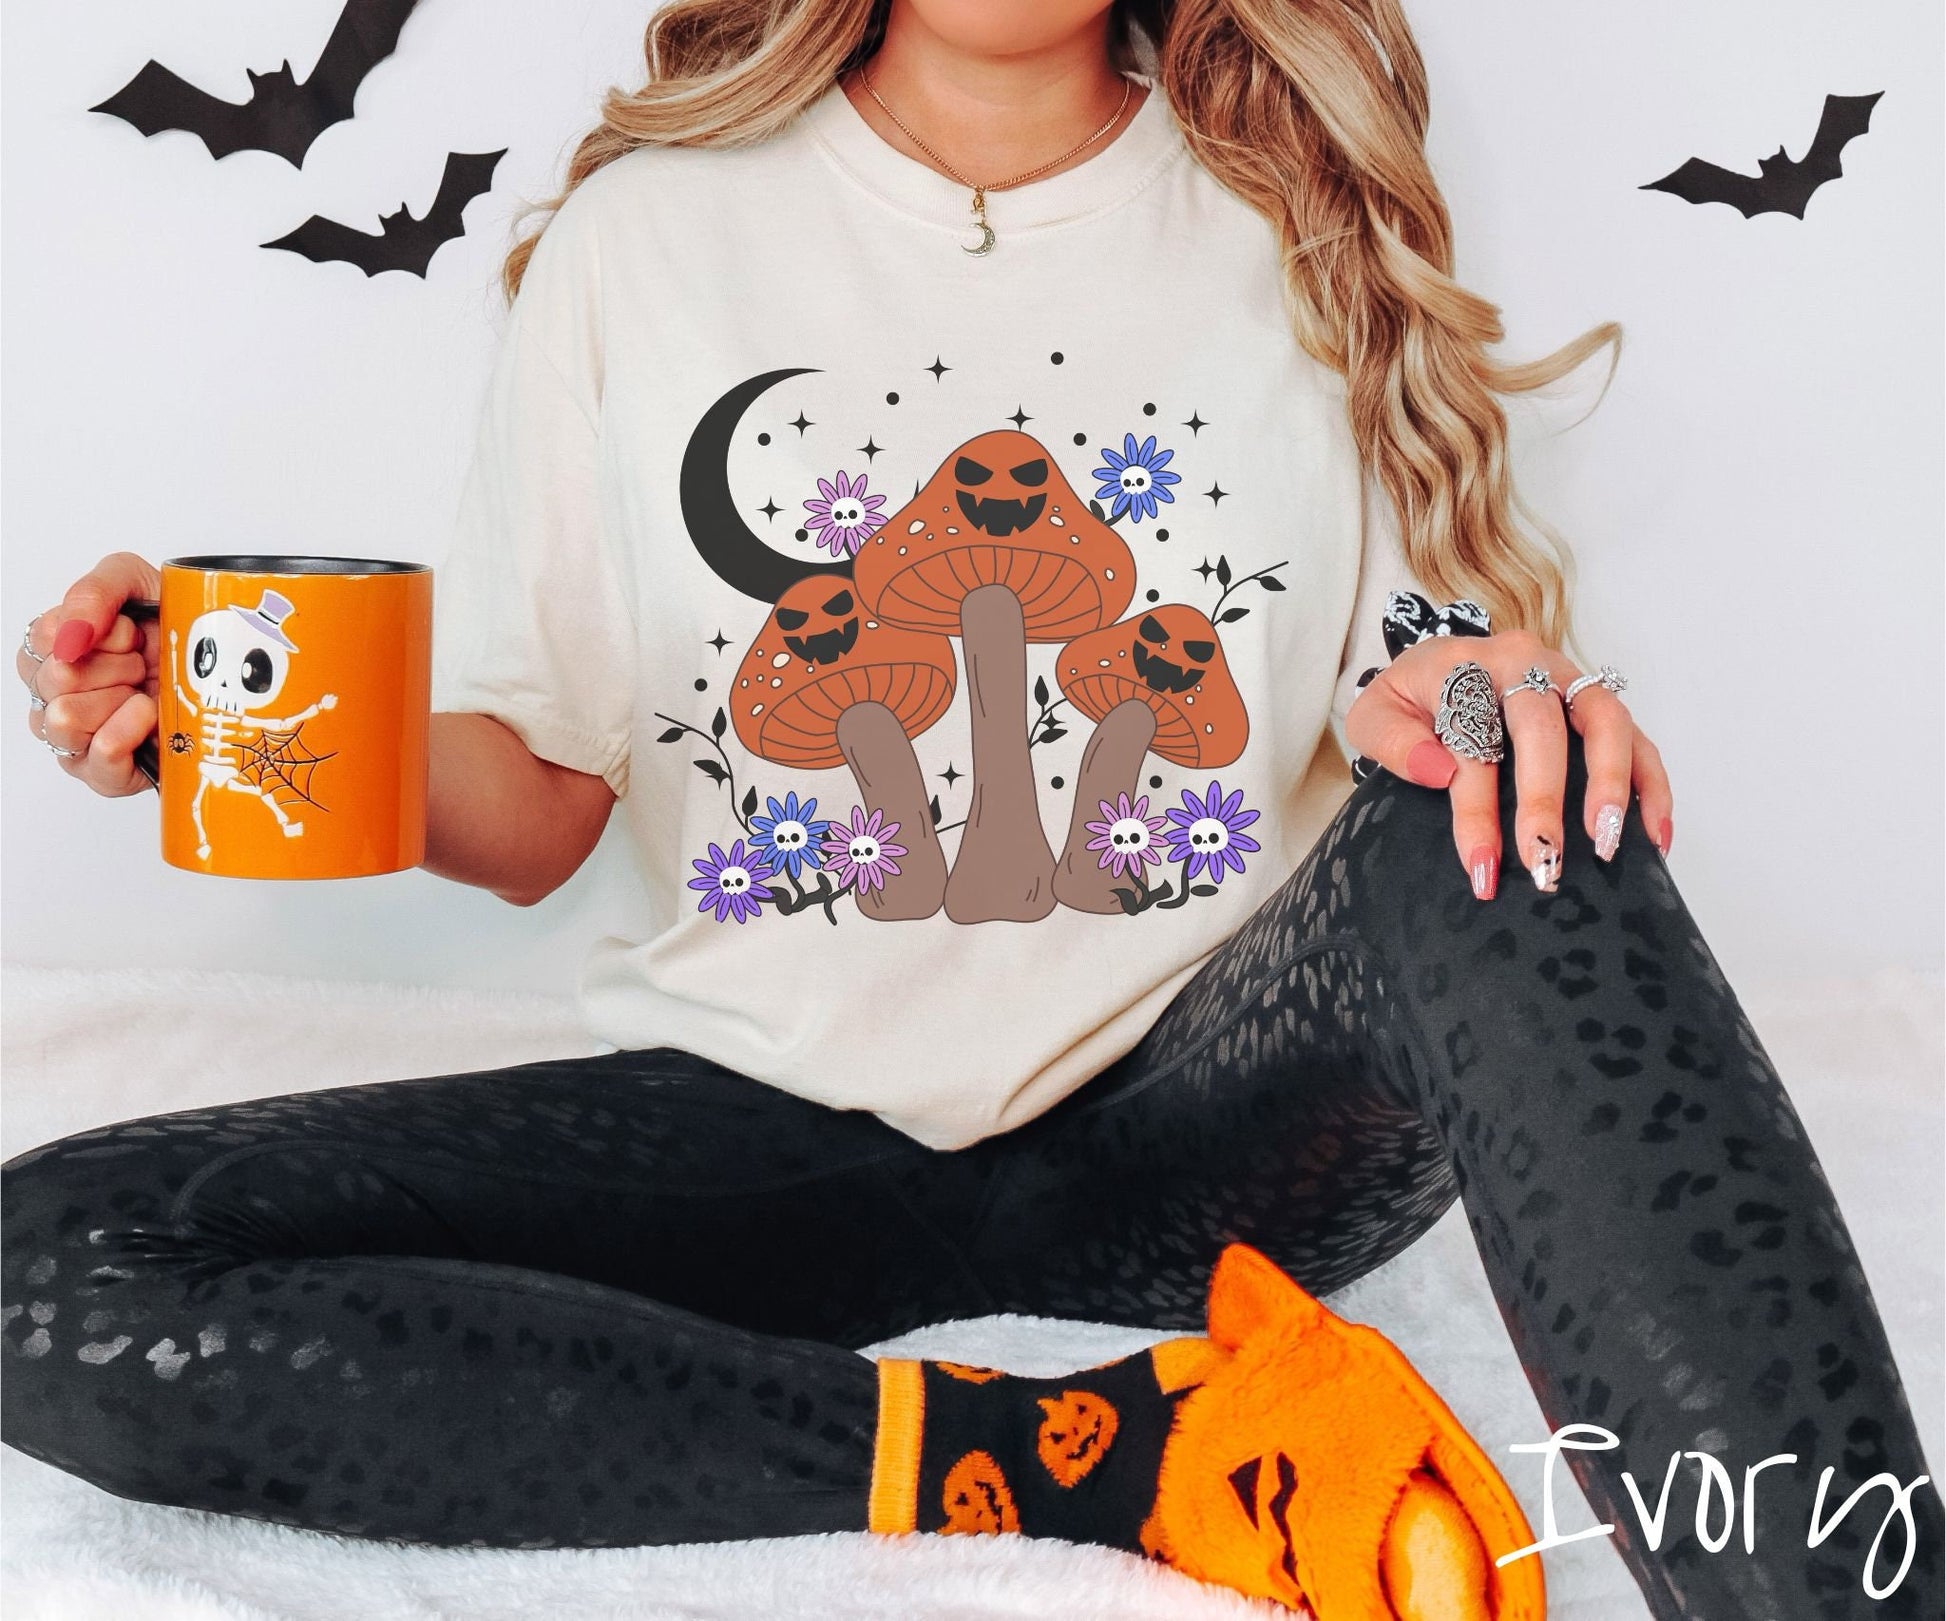 Comfort Colors Shirt, Cottage Core Halloween Shirt, Cottagecore, Mushroom Pumpkin Shirt, Spooky Retro Tee, Groovy Mushroom